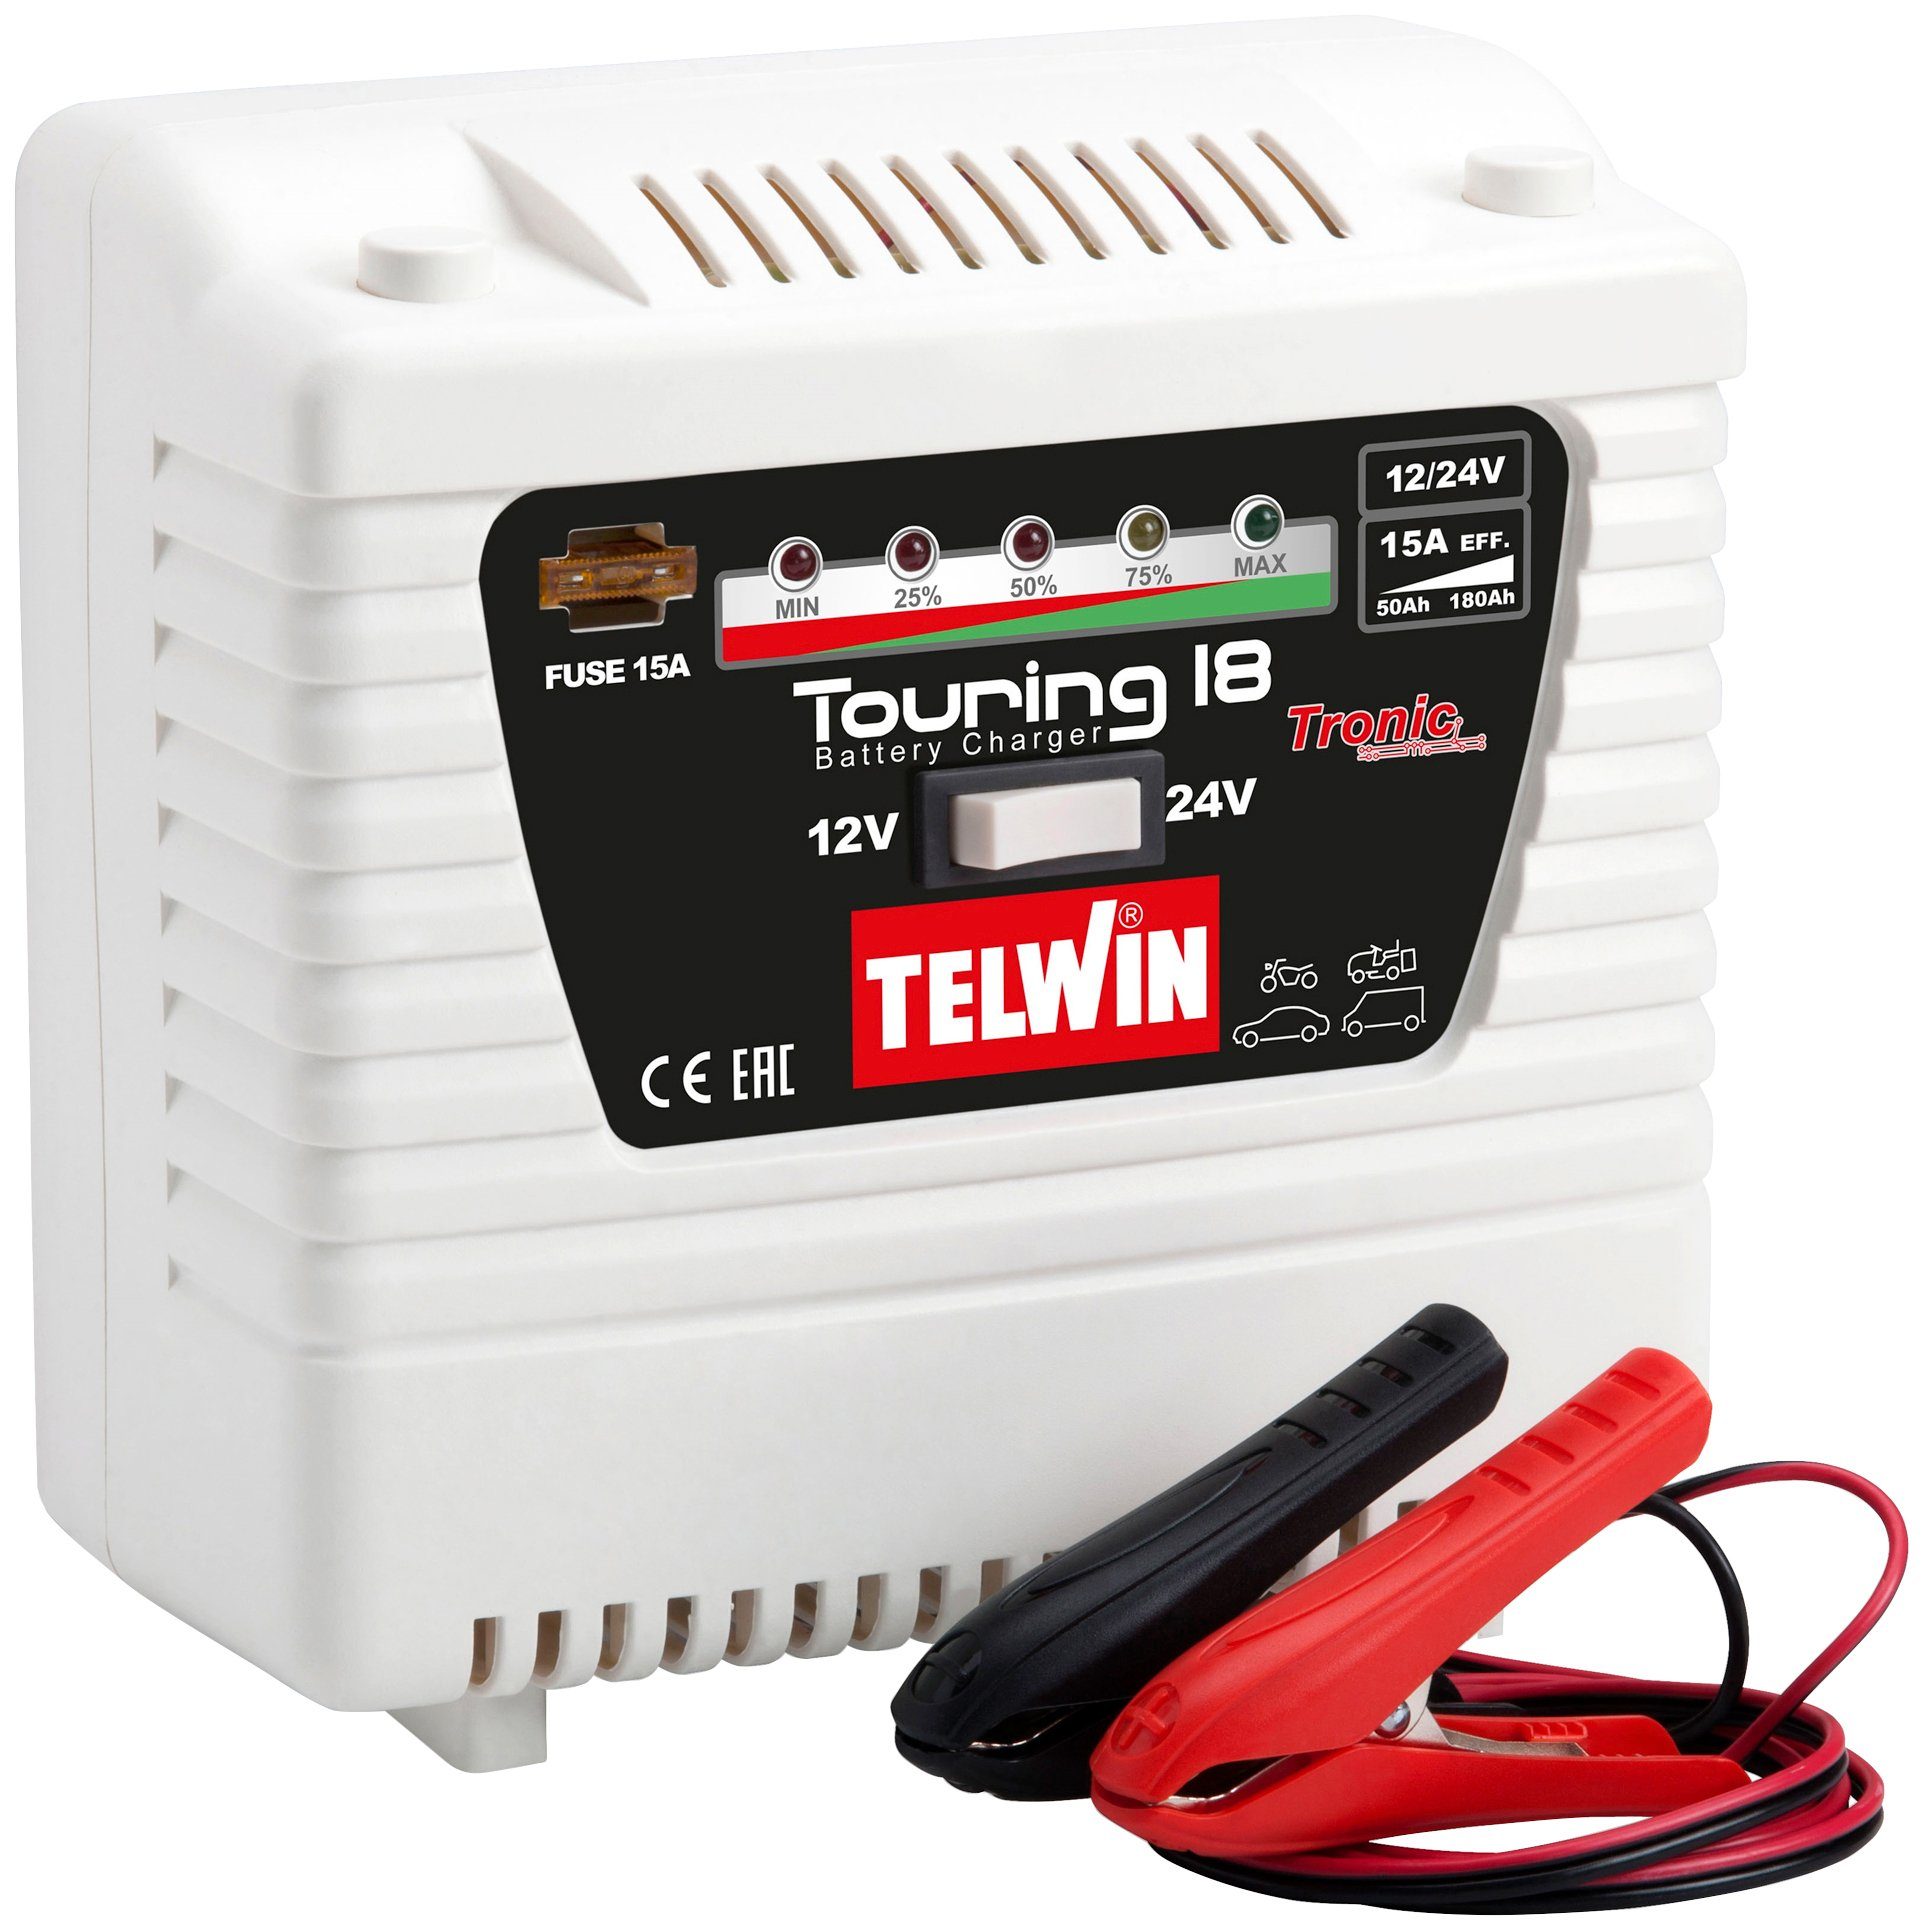 Touring (9000 mA, Autobatterie-Ladegerät 12/24 V) 18 TELWIN